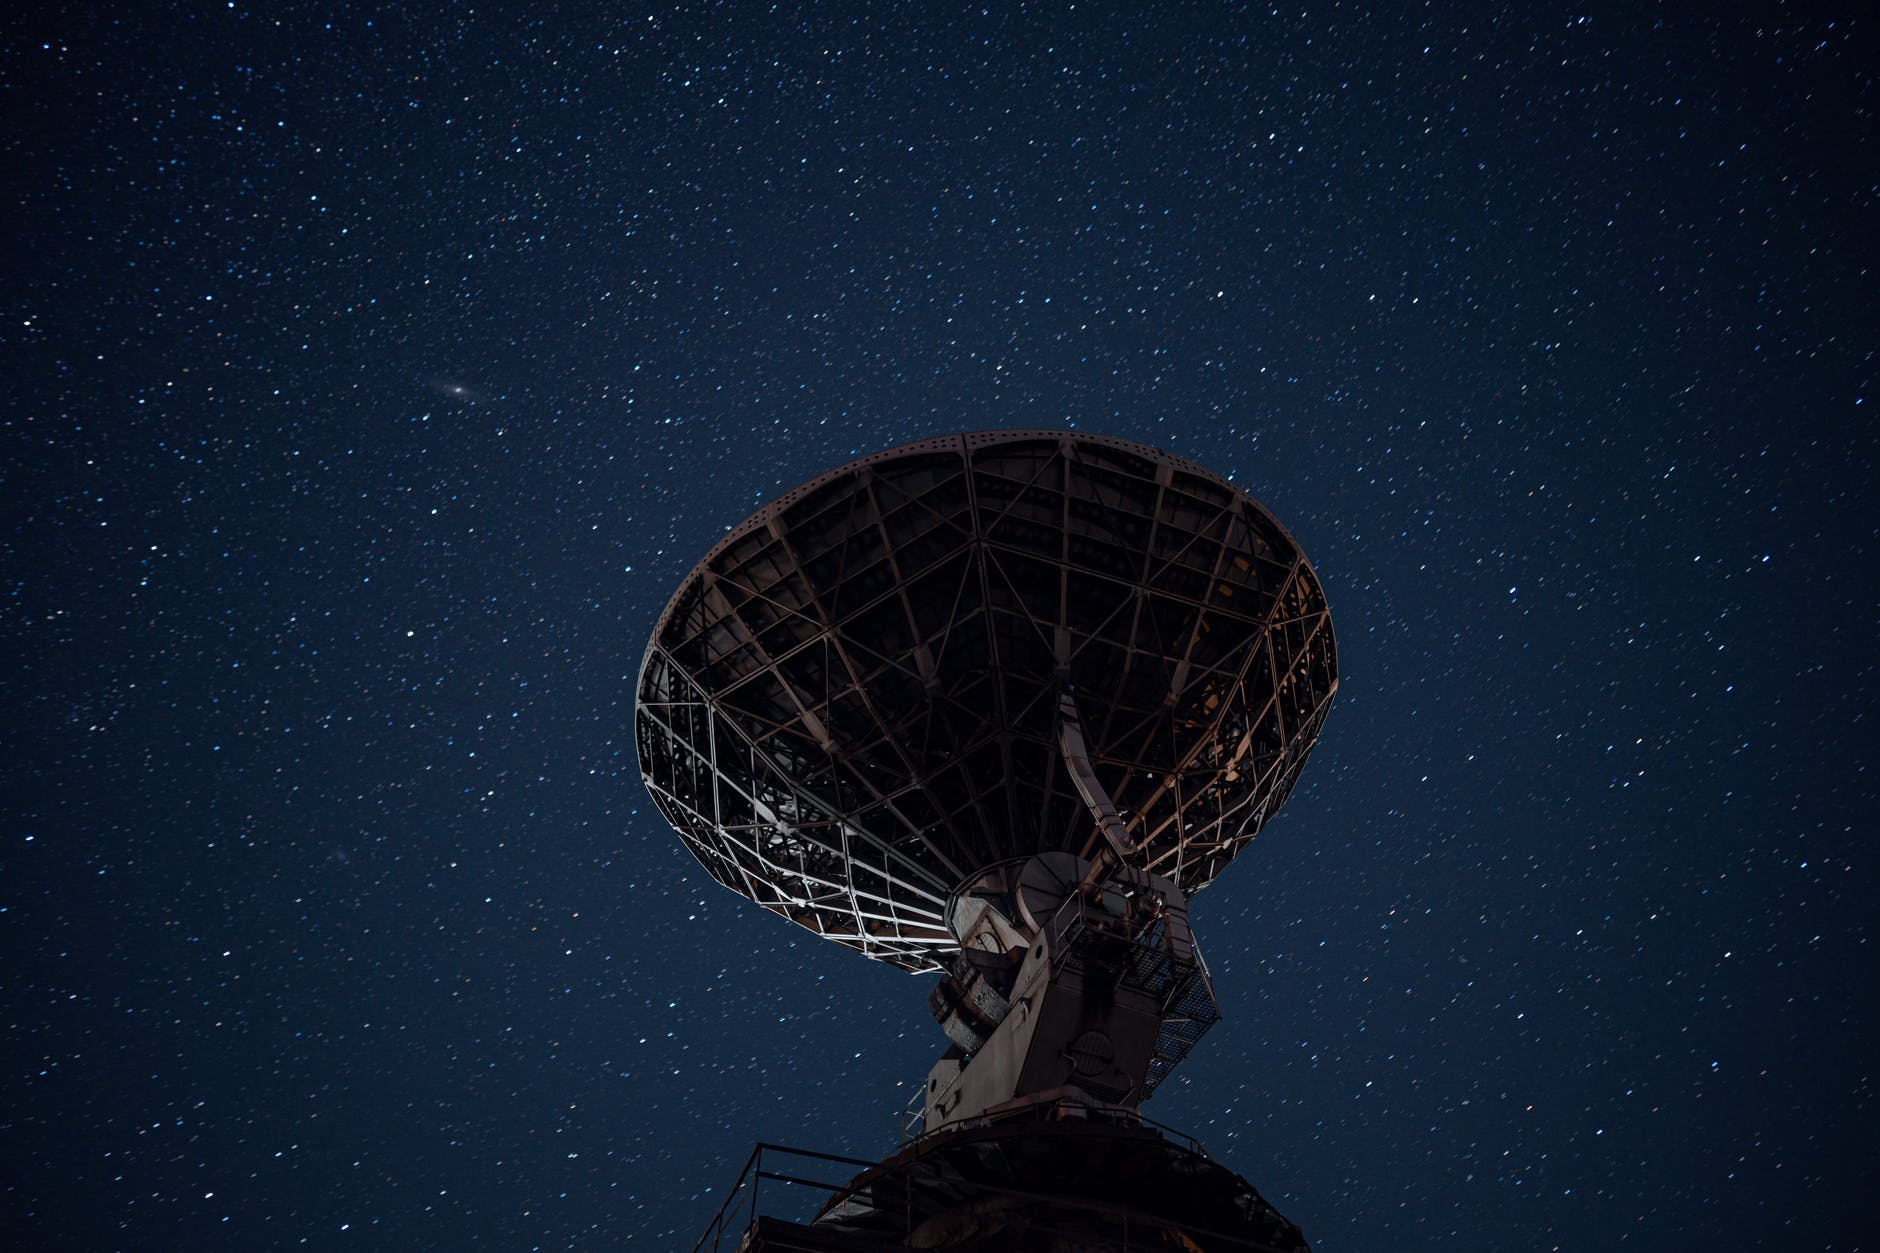 radio telescope under bright starry sky